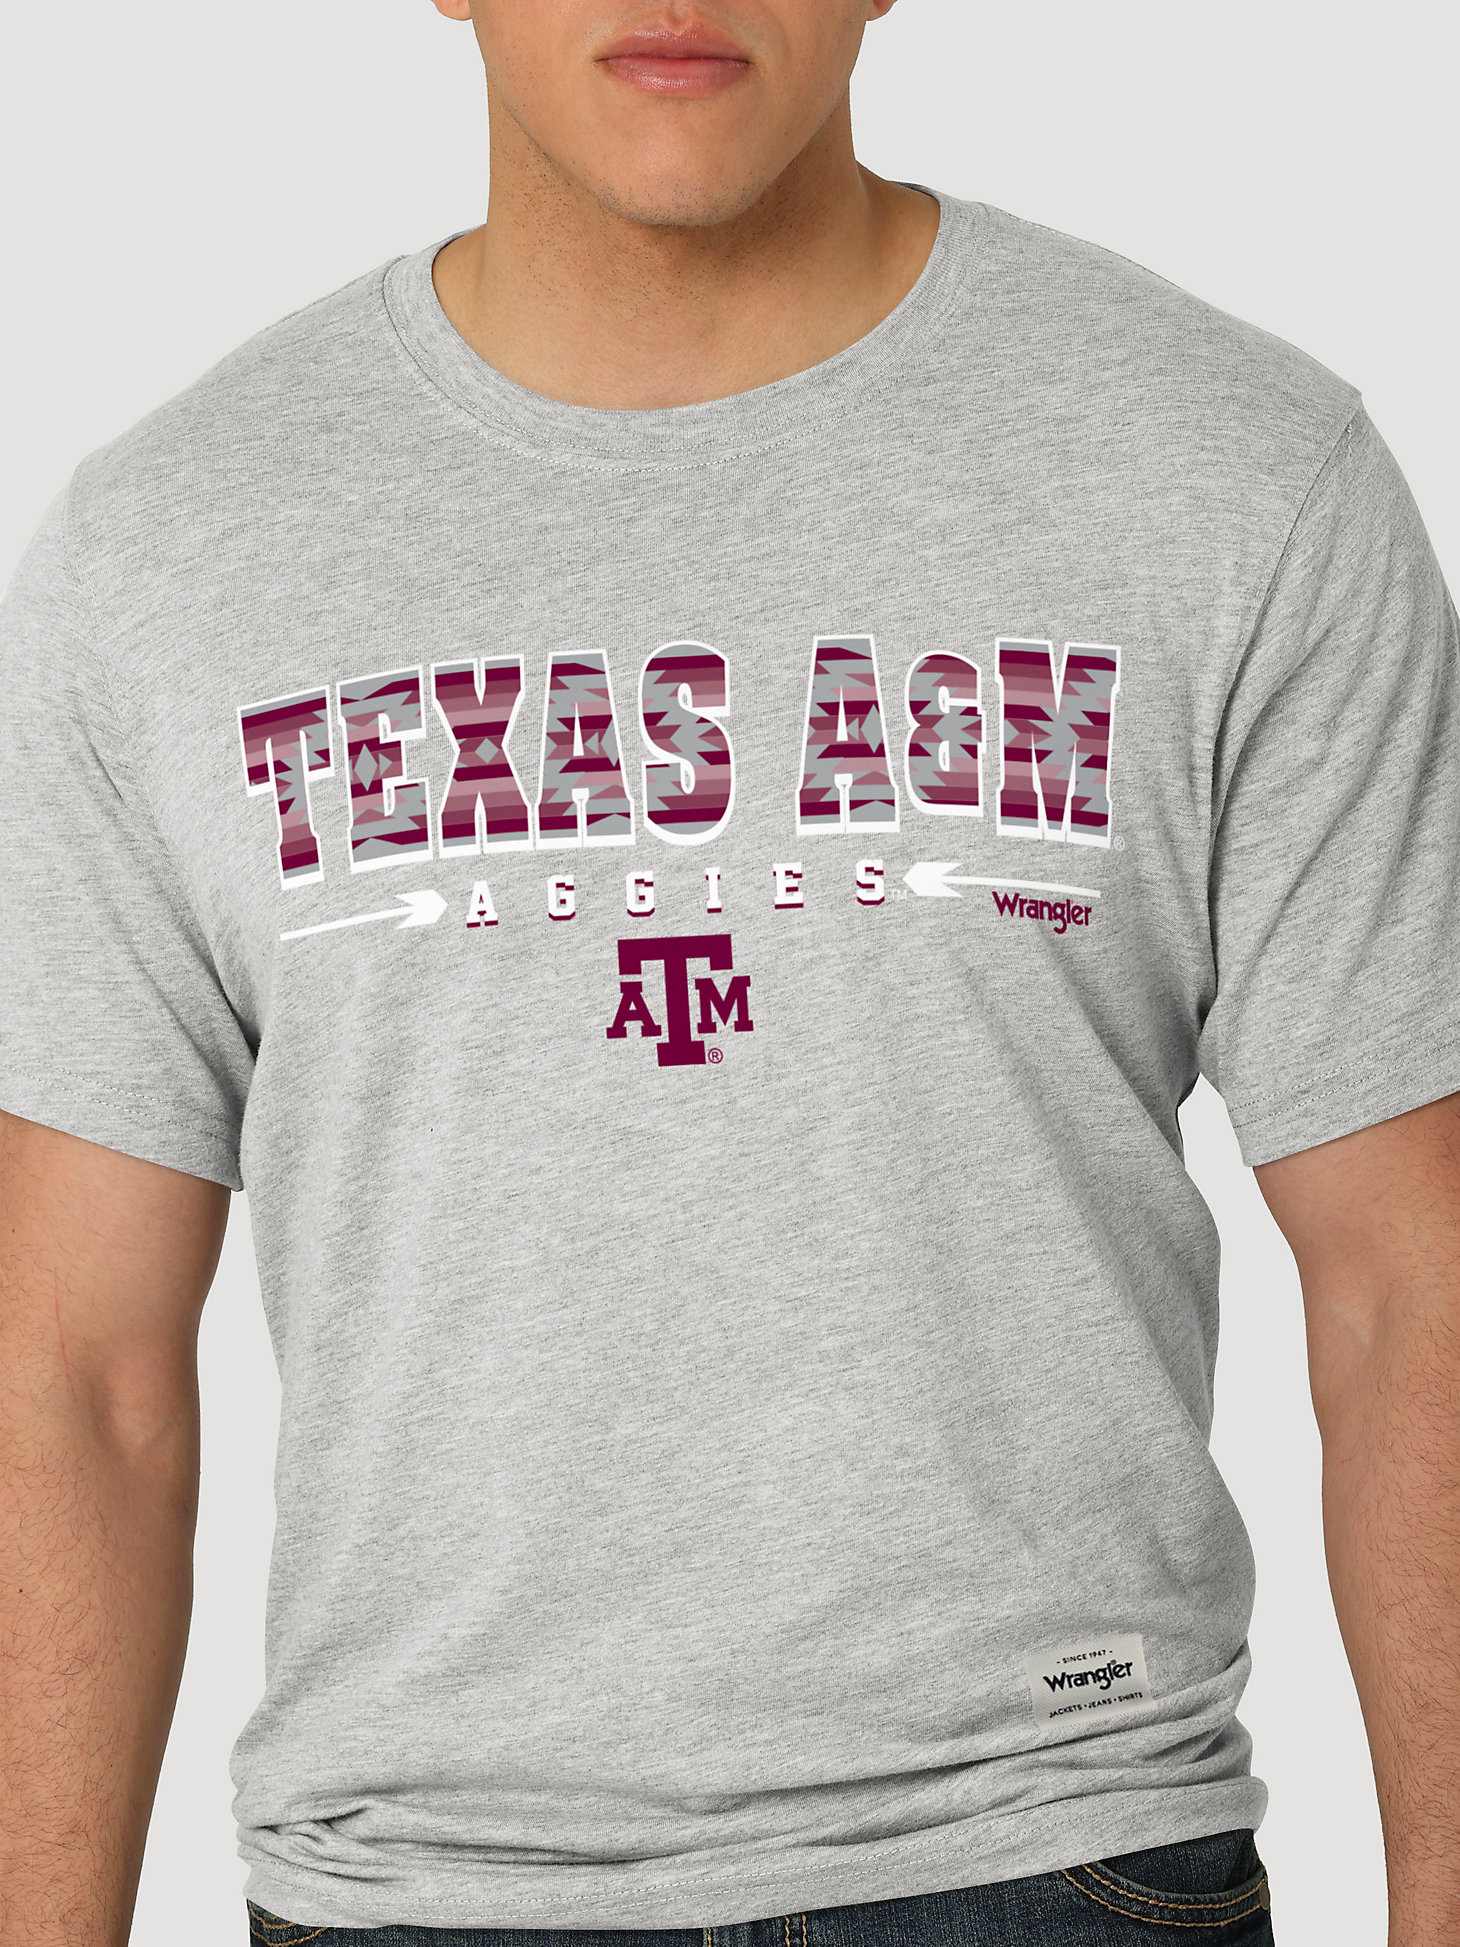 Wrangler Collegiate Sunset Printed Short Sleeve T-Shirt in Texas A&M alternative view 1